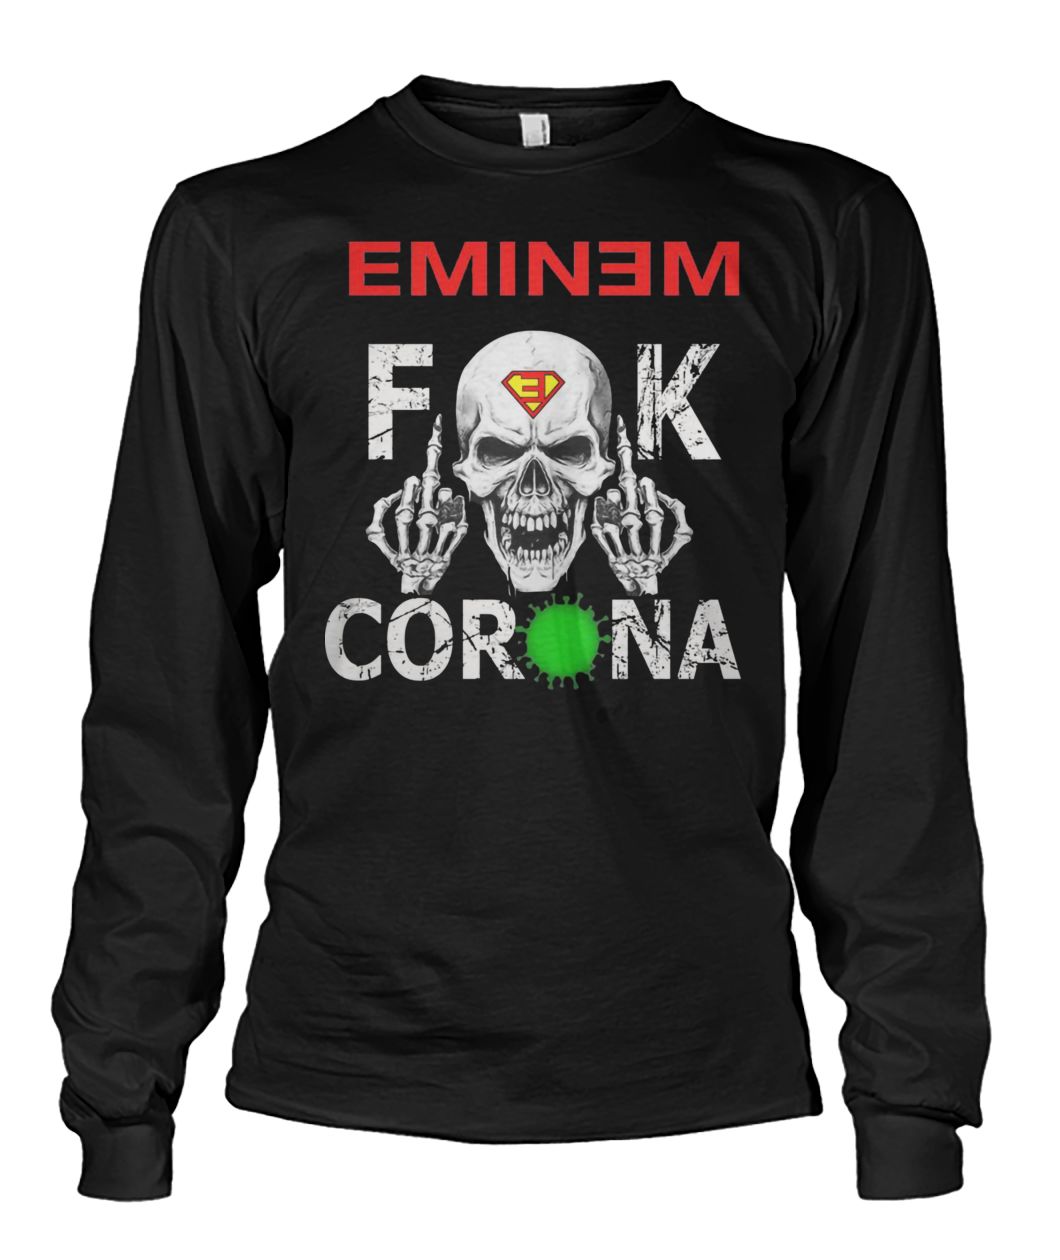 Skull eminem fuck corona long sleeved